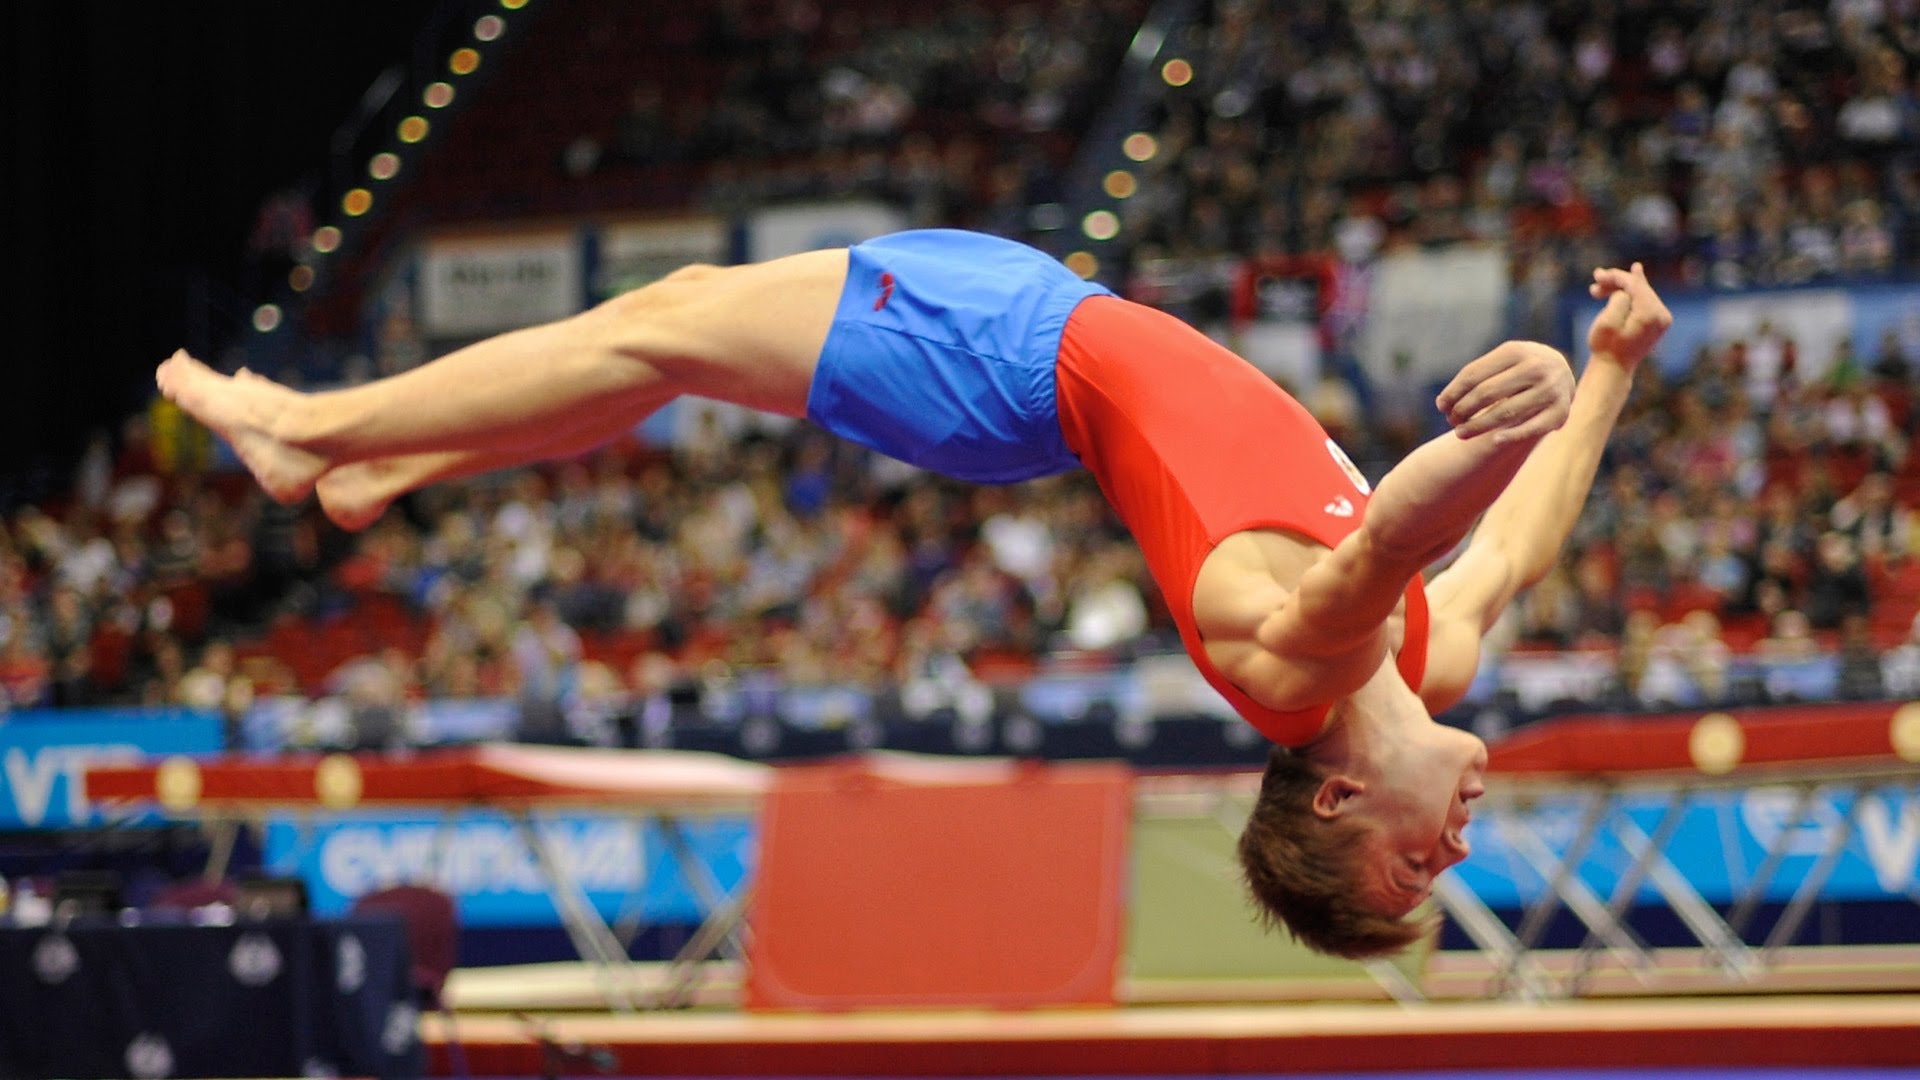 Trampoline gymnastics: A back-flip trick performed by a professional gymnast, Competitive acrobatics sport discipline. 1920x1080 Full HD Background.